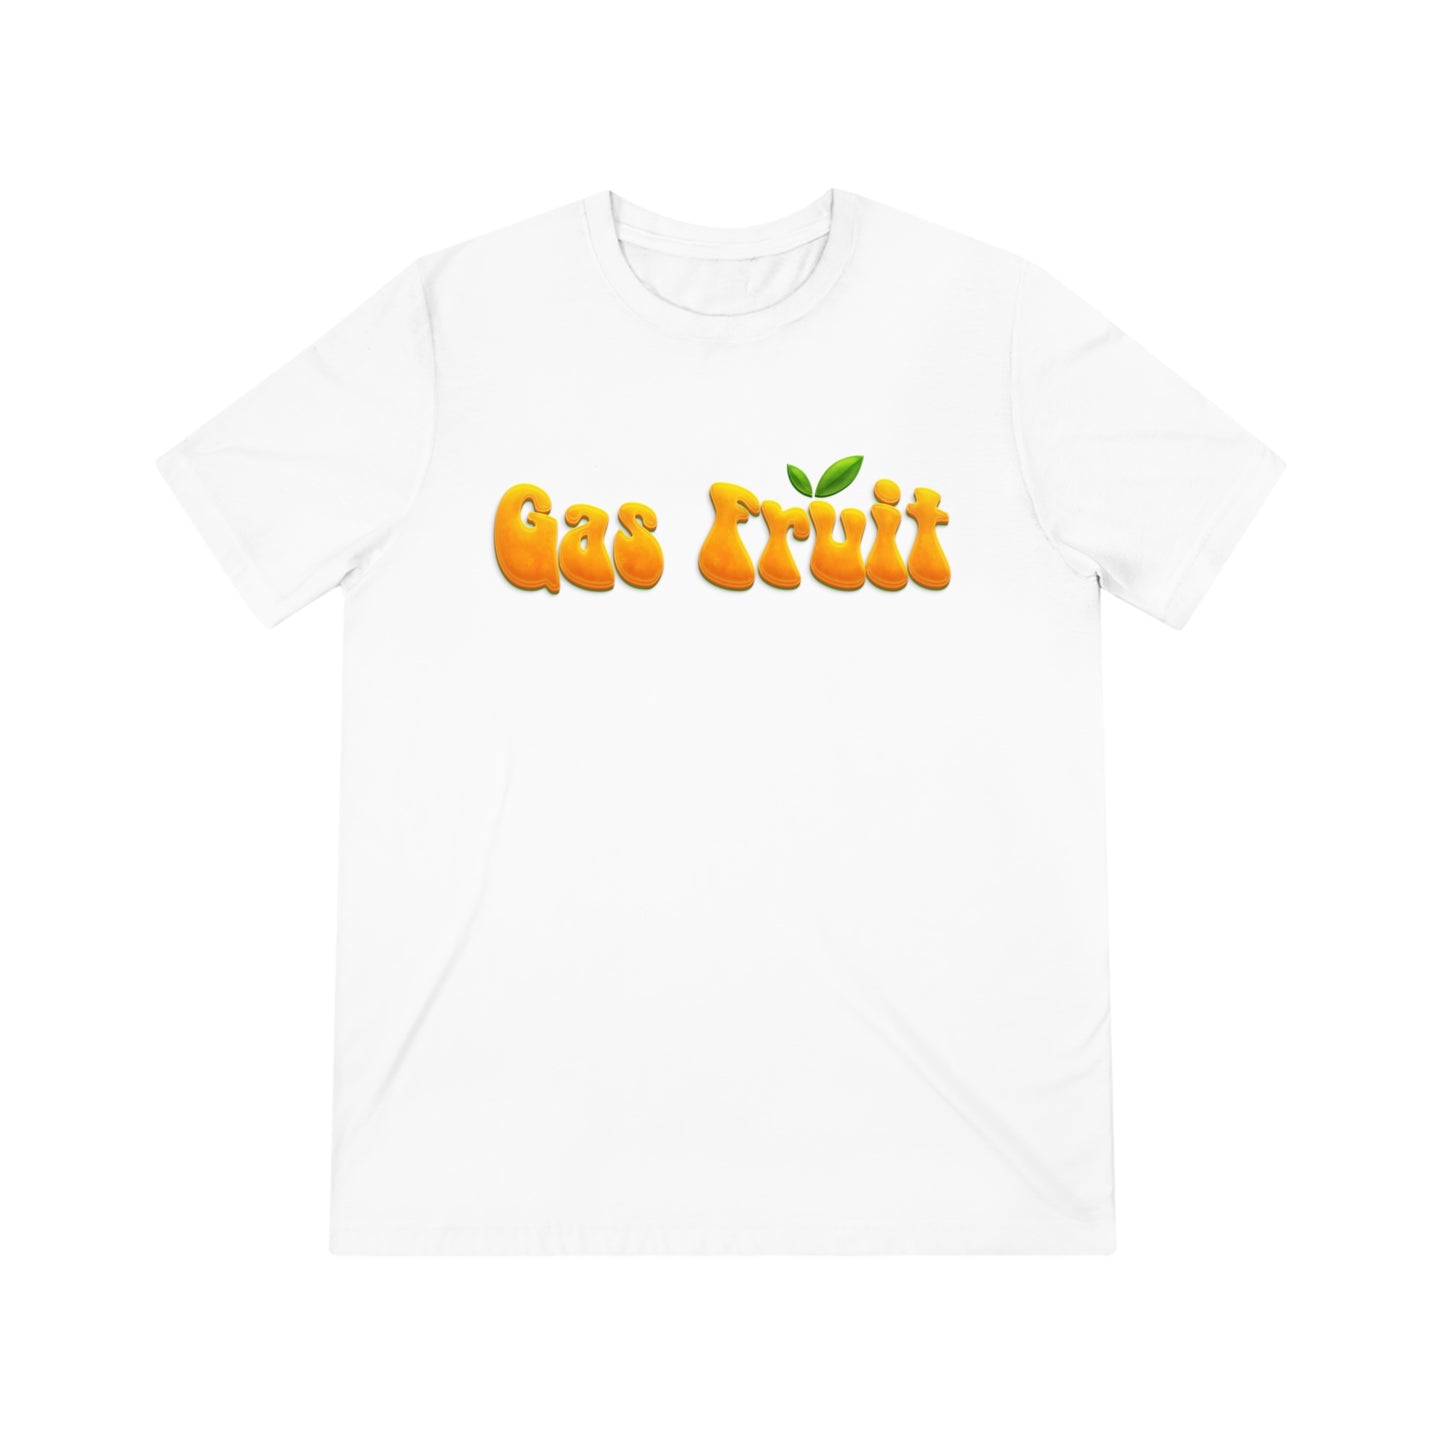 Gas Fruit - T-Shirt